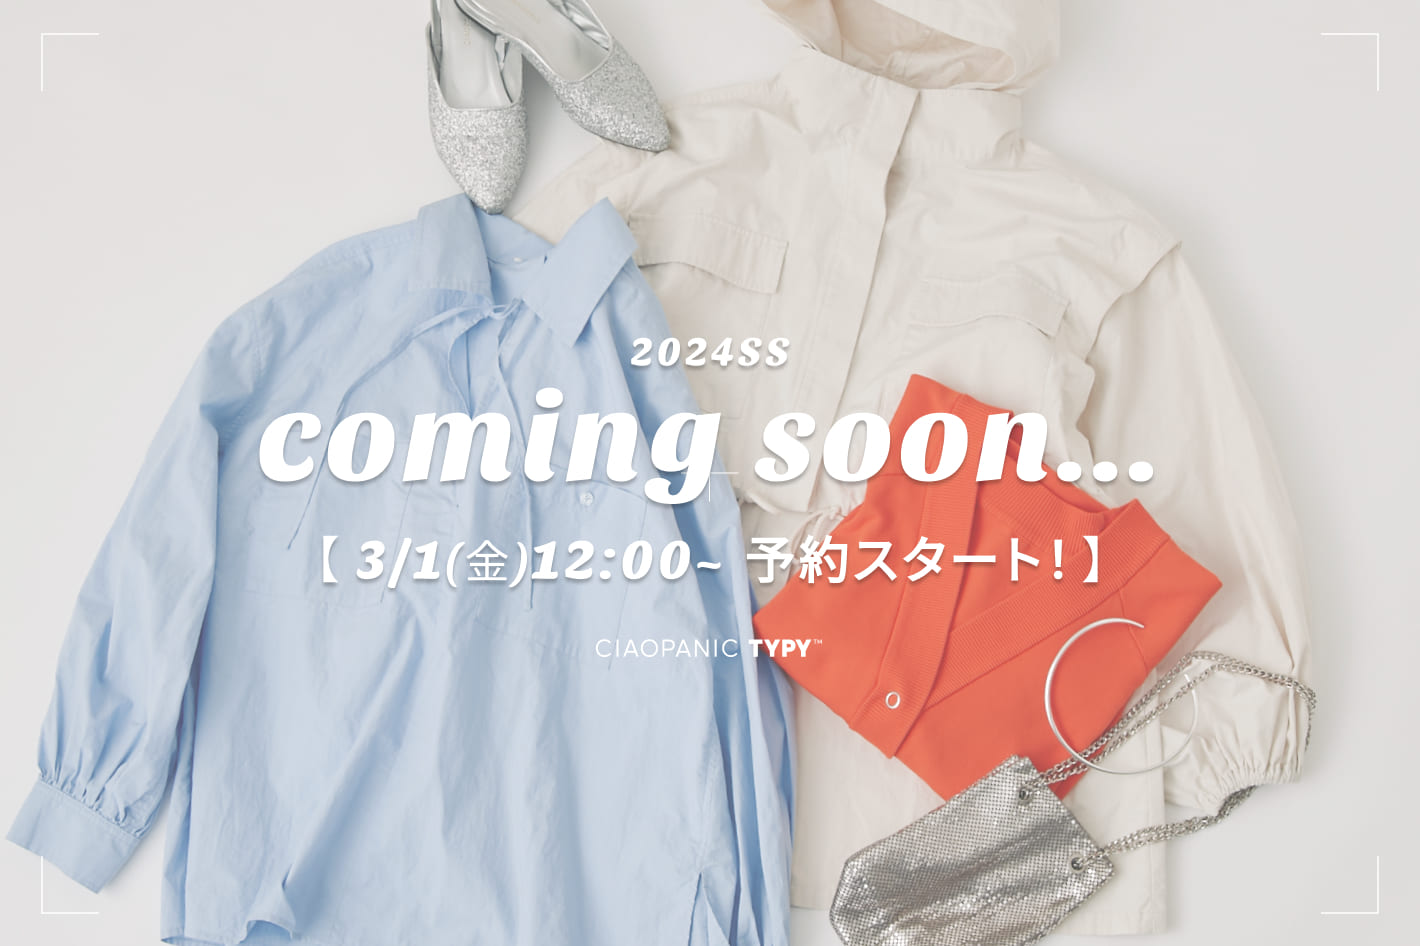 CIAOPANIC TYPY 【3/1(金)12:00予約スタート！】coming soon...